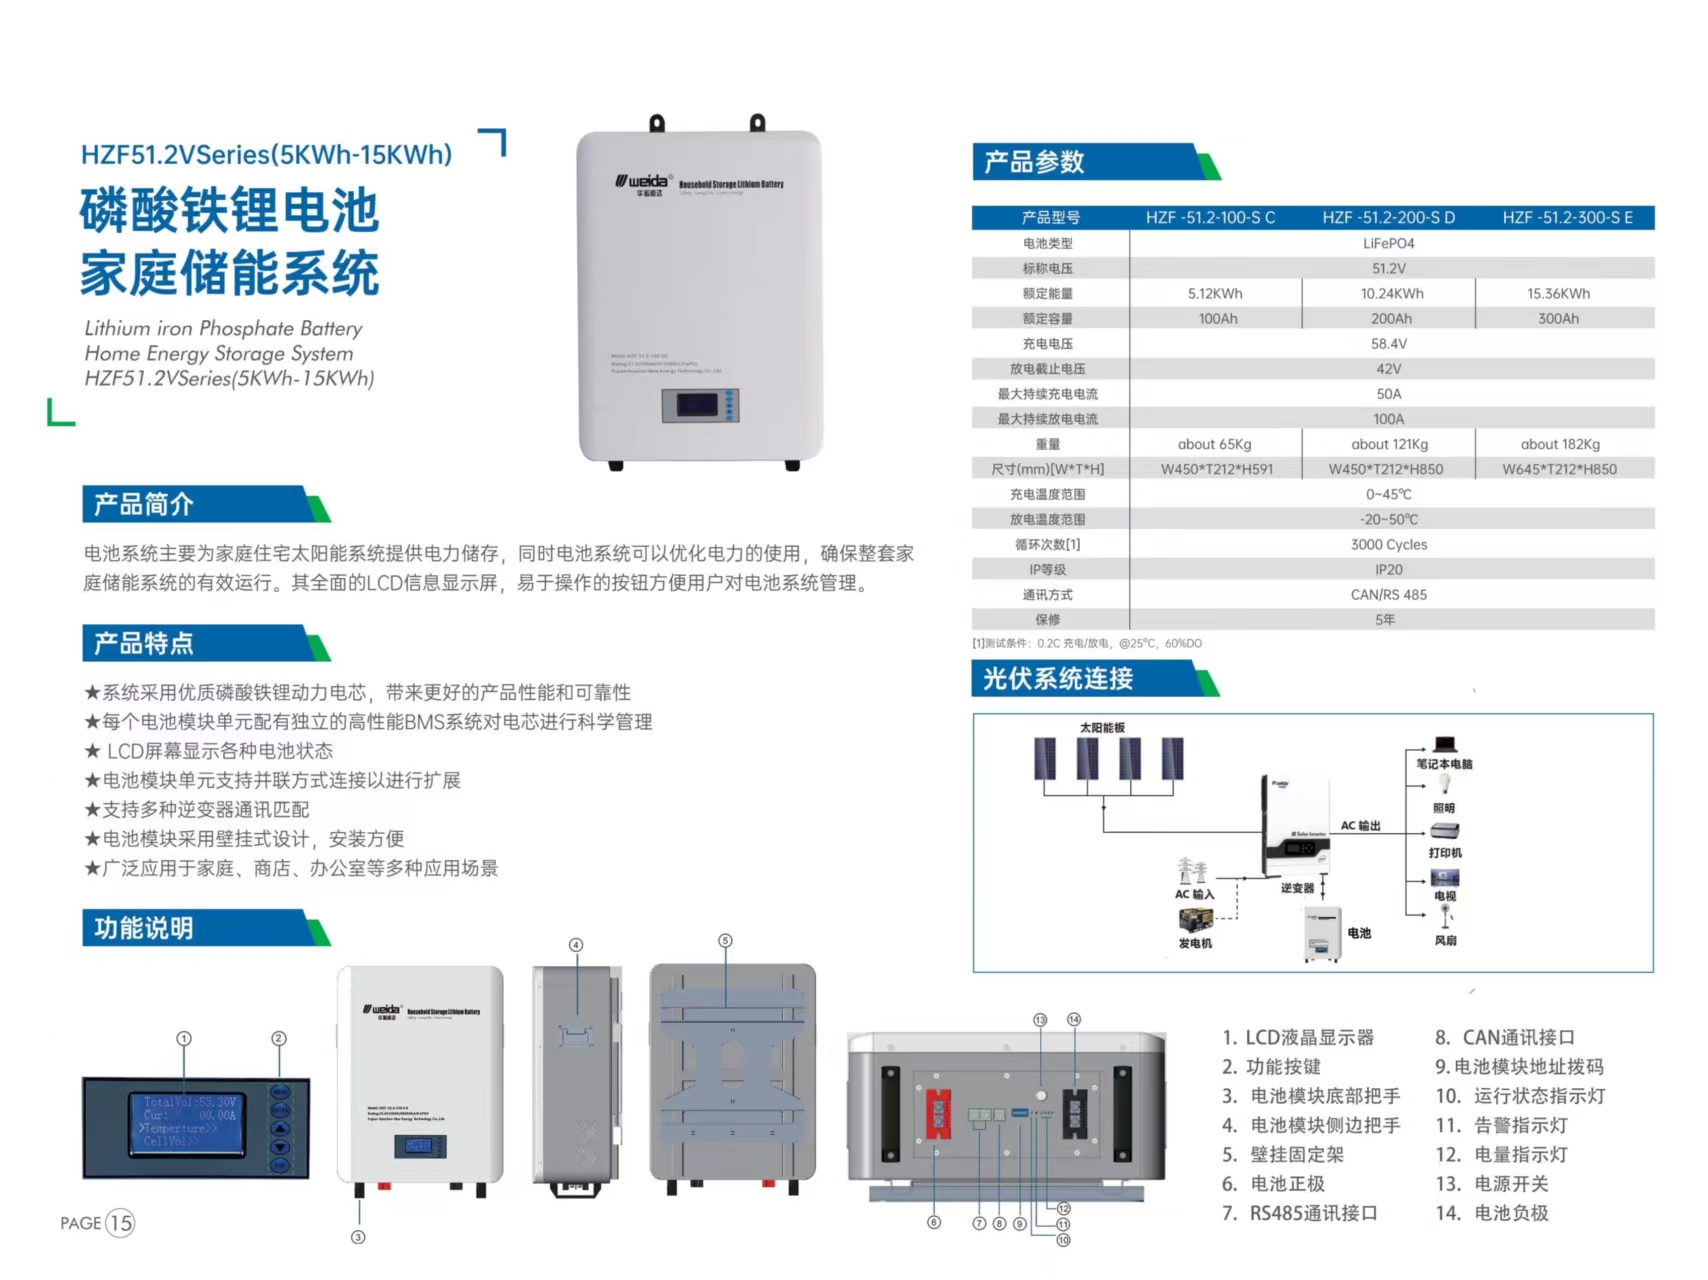 HZF51.2Veries(5KWh-15KWh)磷酸铁锂电池家庭储能系统